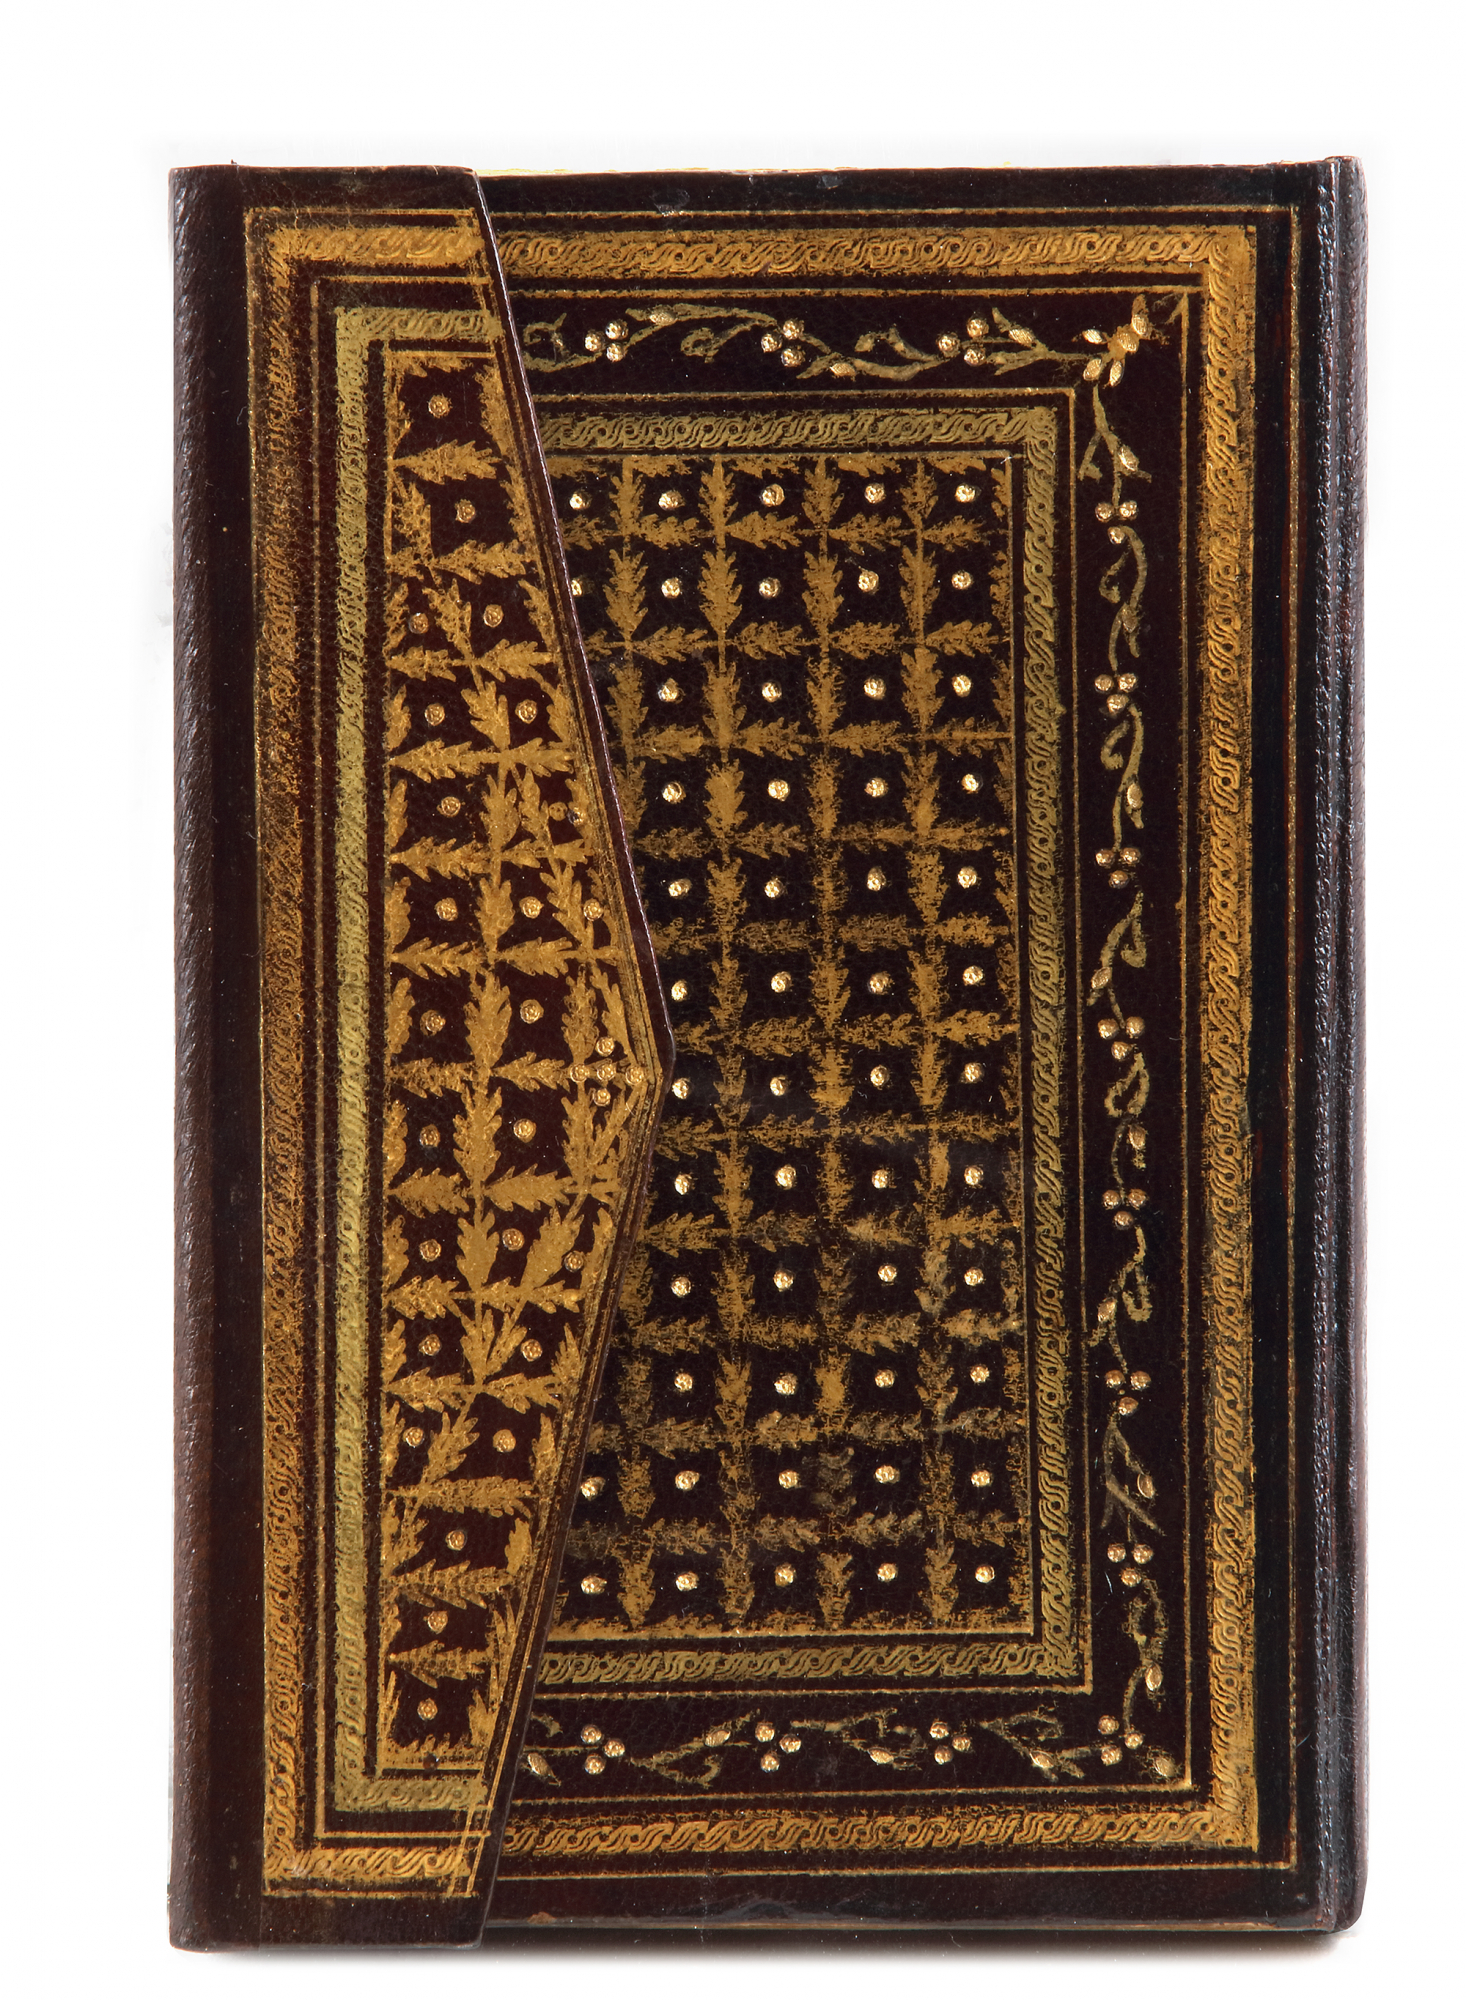 AN OTTOMAN QURAN SIGNED AL-HAJJ 'ABD AL-GHANI AL-WAHBI, DATED 1263 AH/1846-47 AD - Image 5 of 5